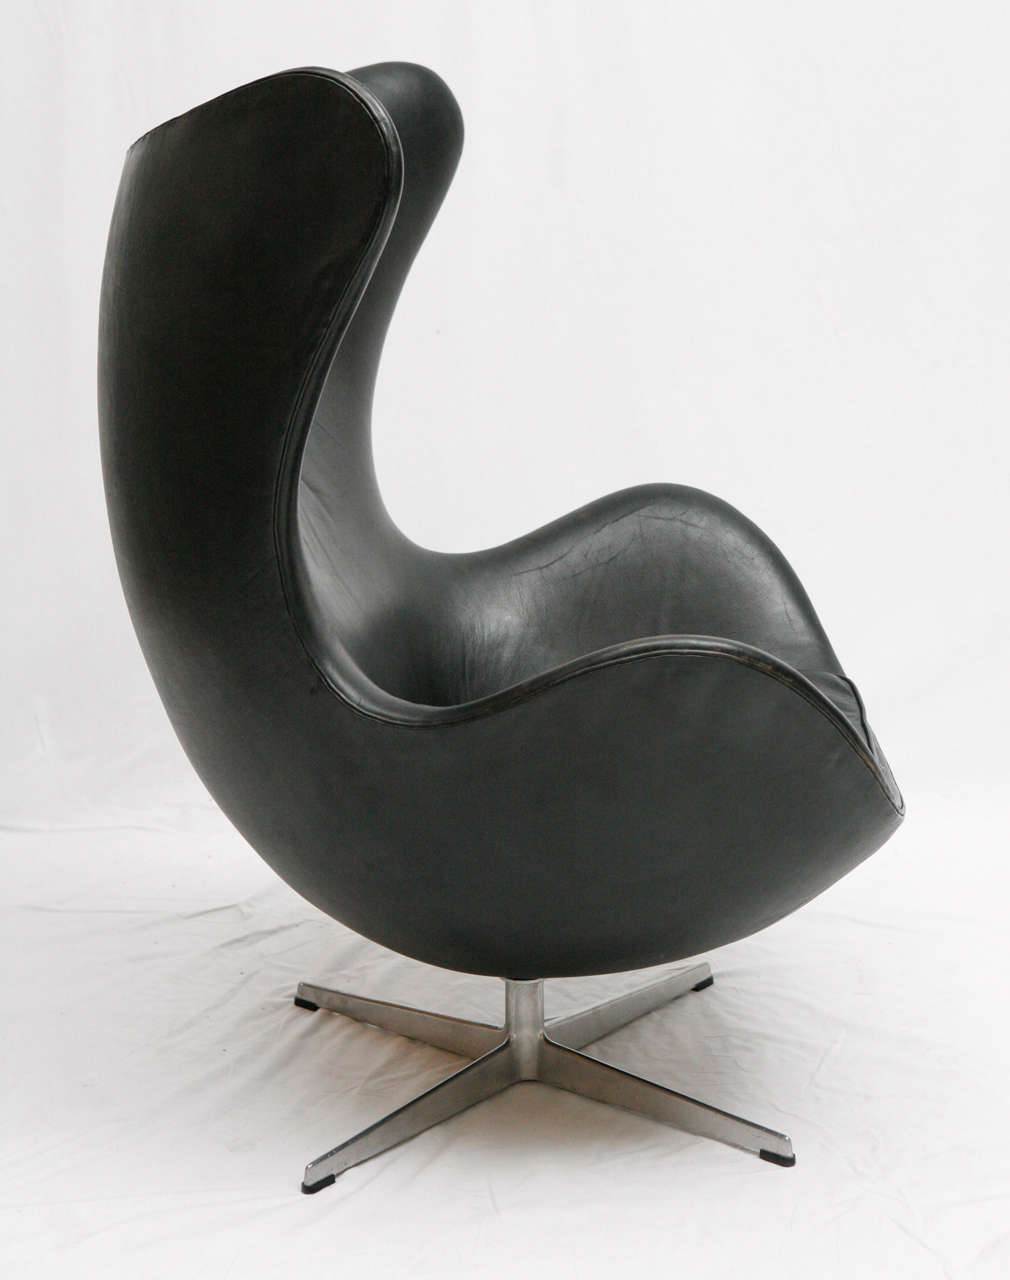 egg chair design -china -b2b -forum -blog -wikipedia -.cn -.gov -alibaba